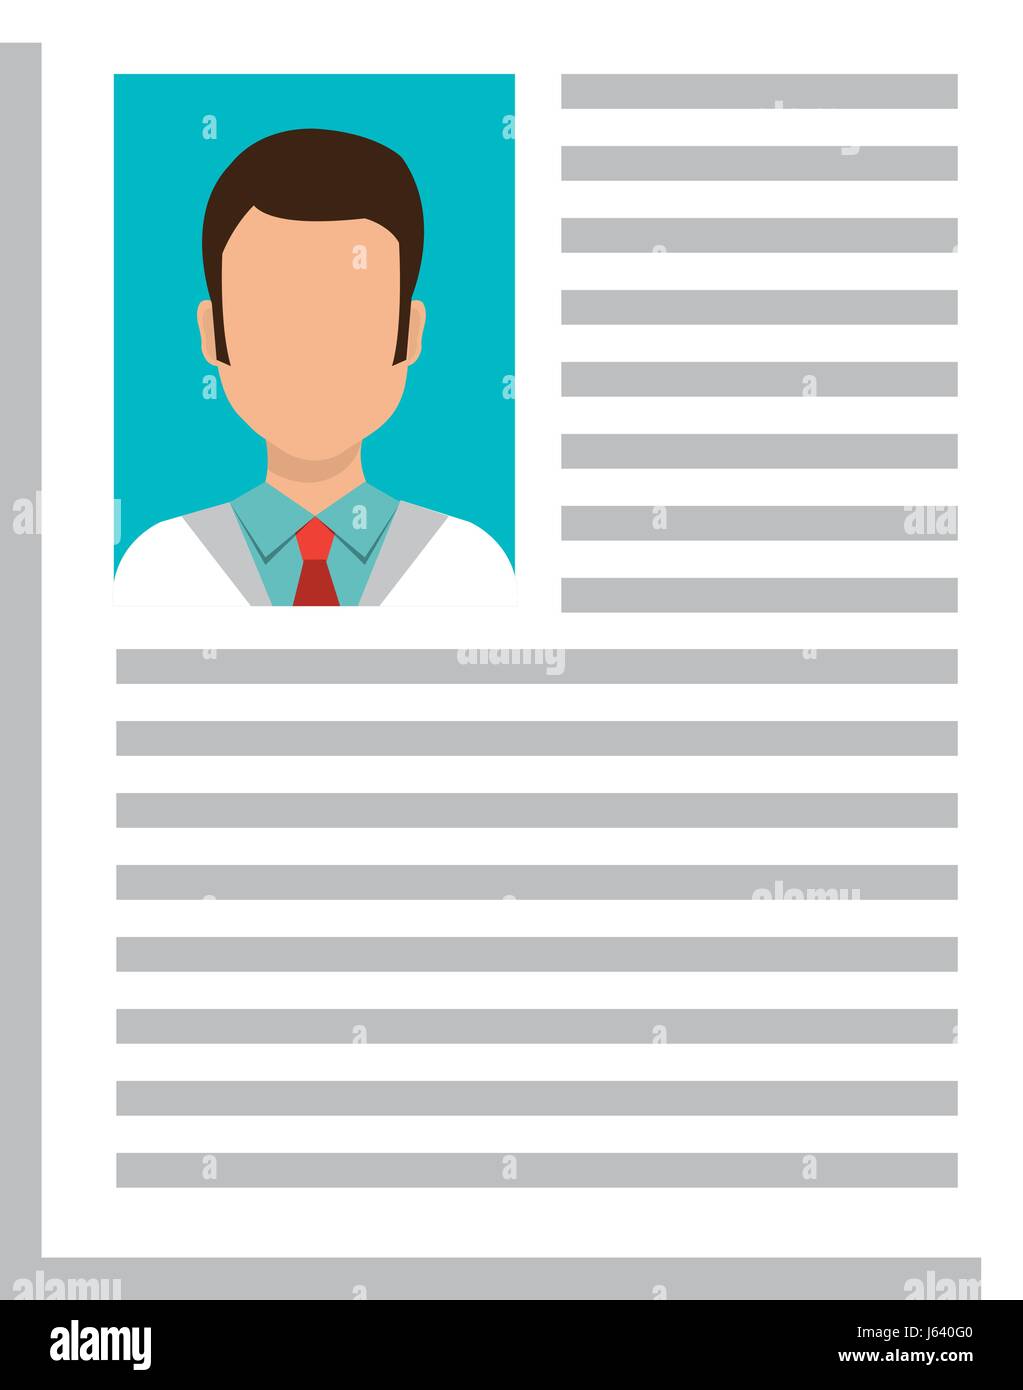 Icono de papel curriculum médico Imagen Vector de stock - Alamy